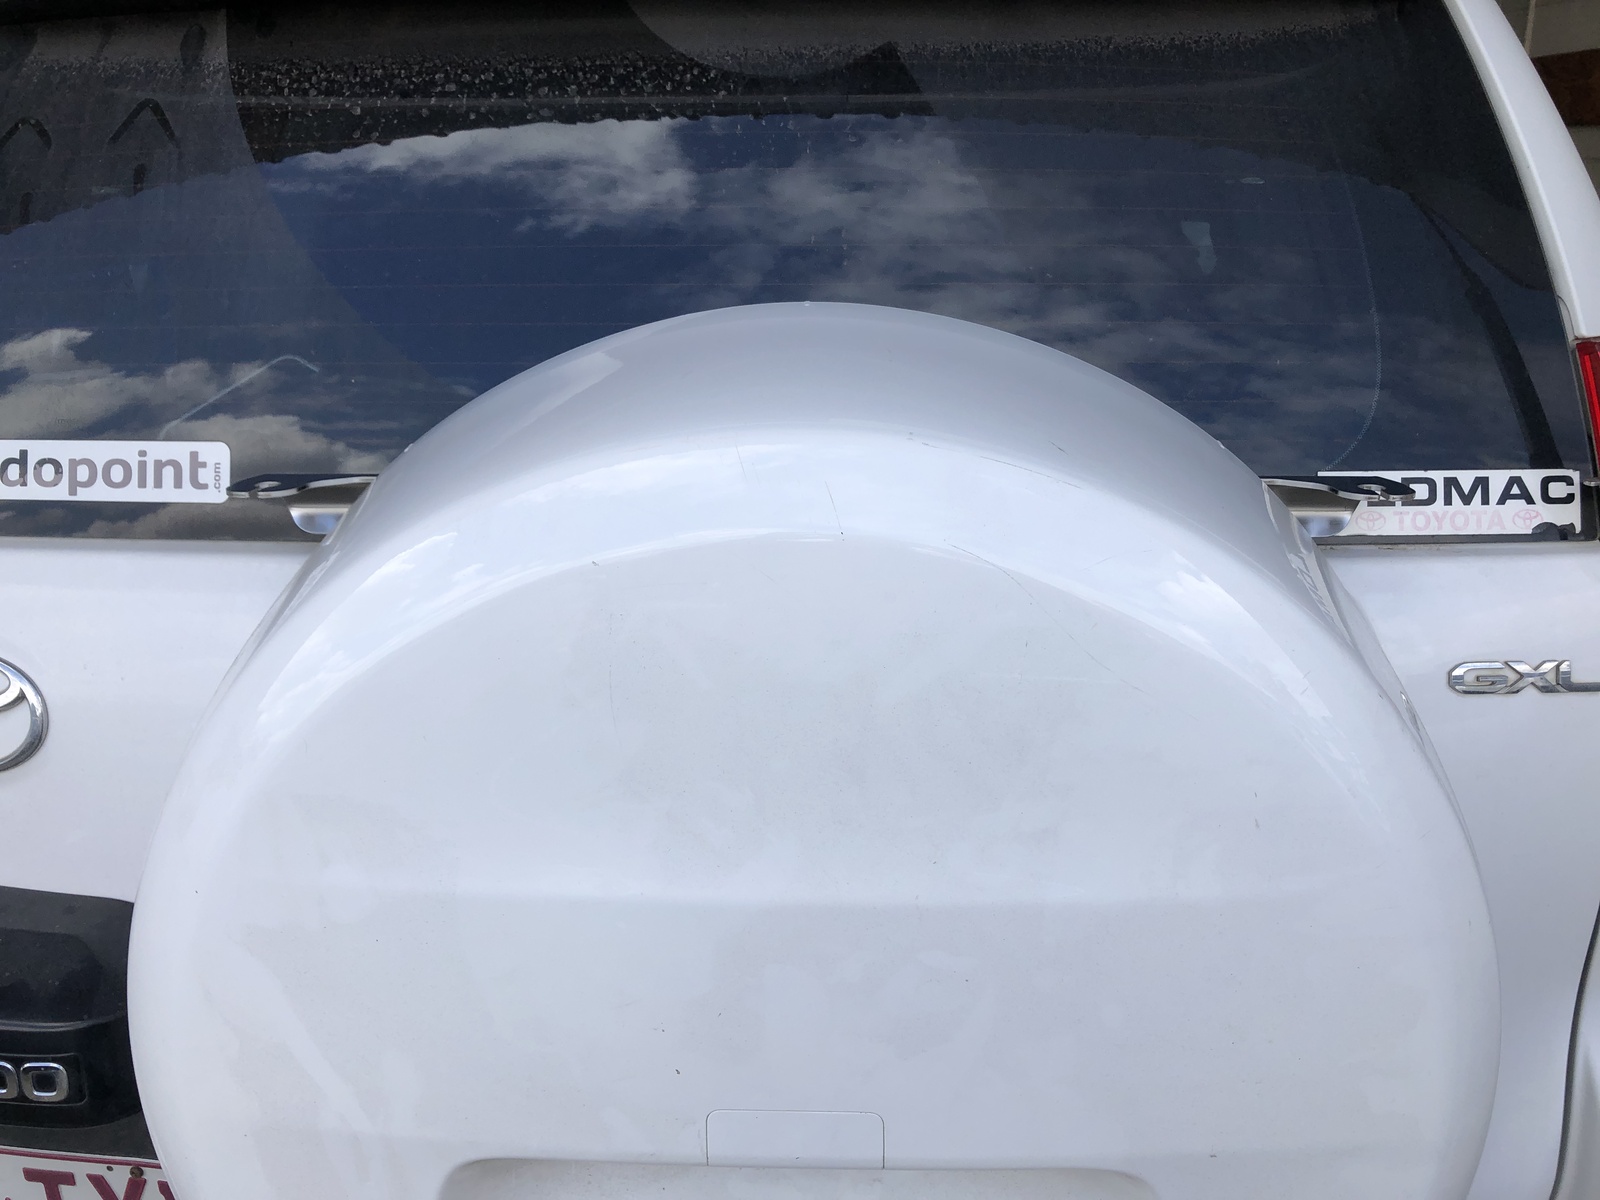 Double Rear Aerial Light Mount to Suit Toyota Prado 150 / Lexus GX 460